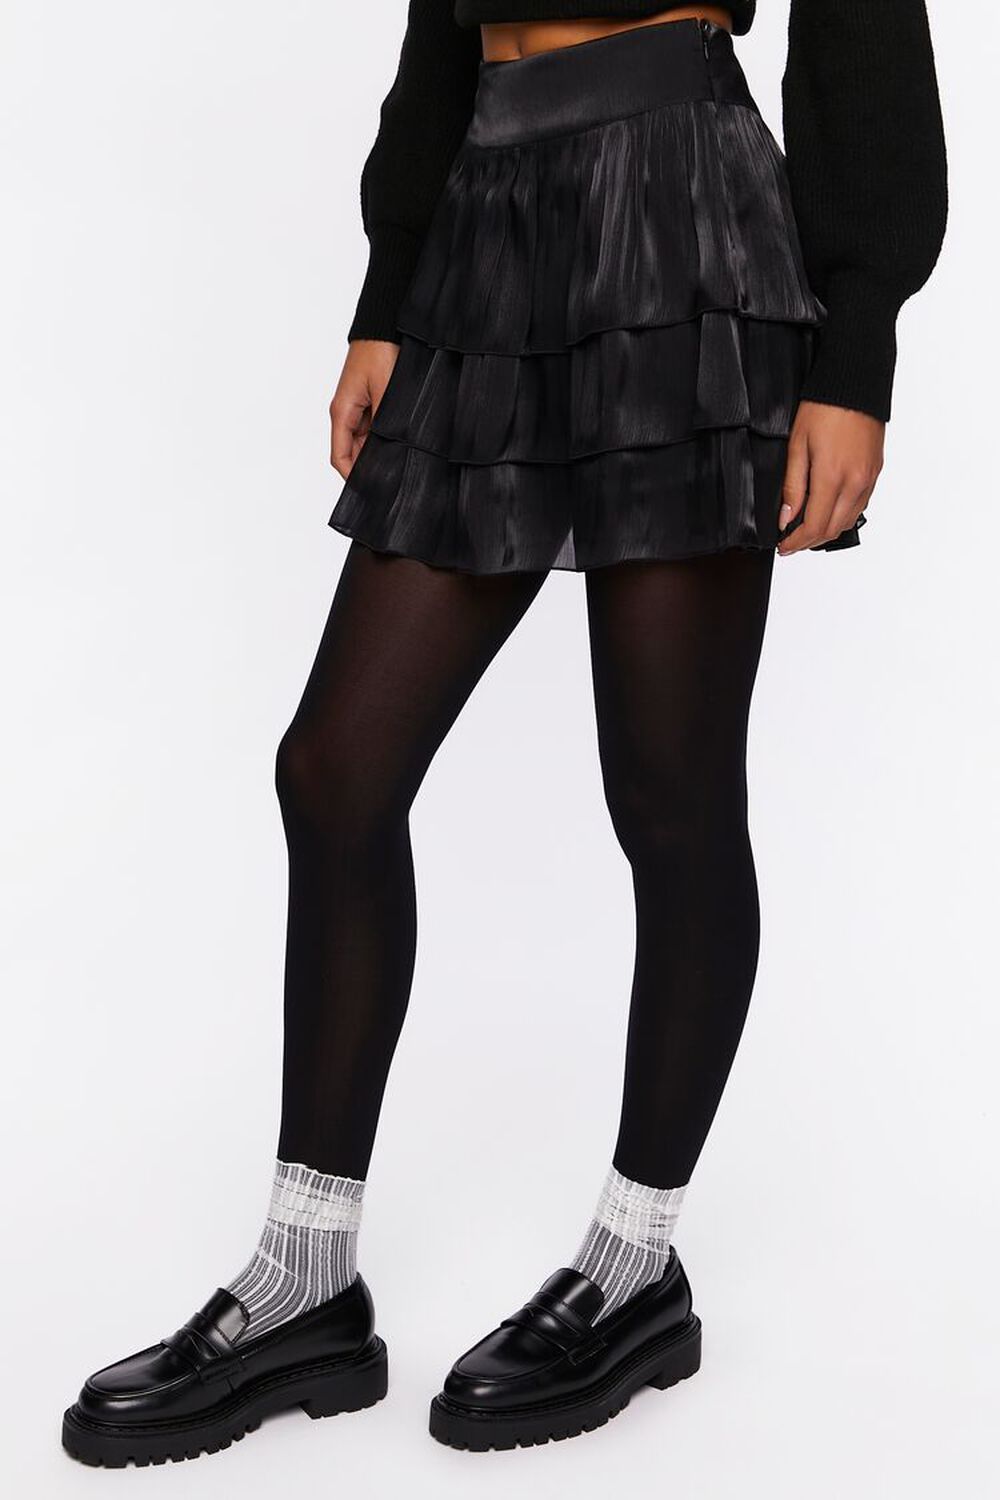 BLACK Sheeny Tiered Mini Skirt, image 3